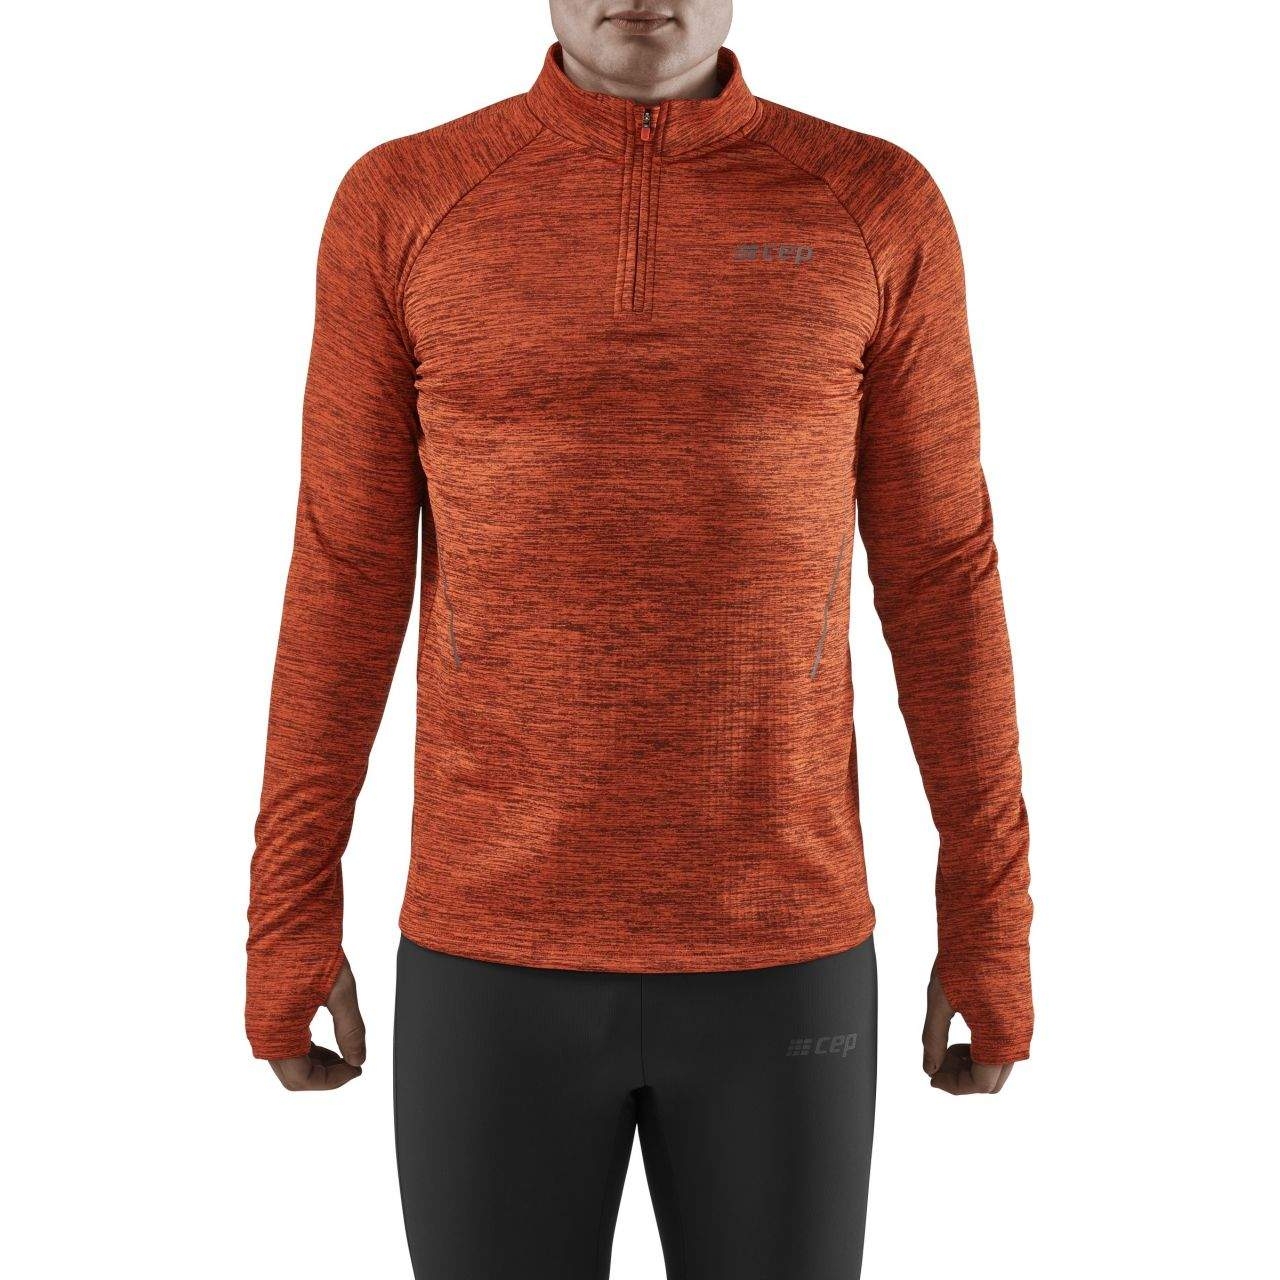 Picture of CEP Winter Run Longsleeve Shirt - dark orange melange